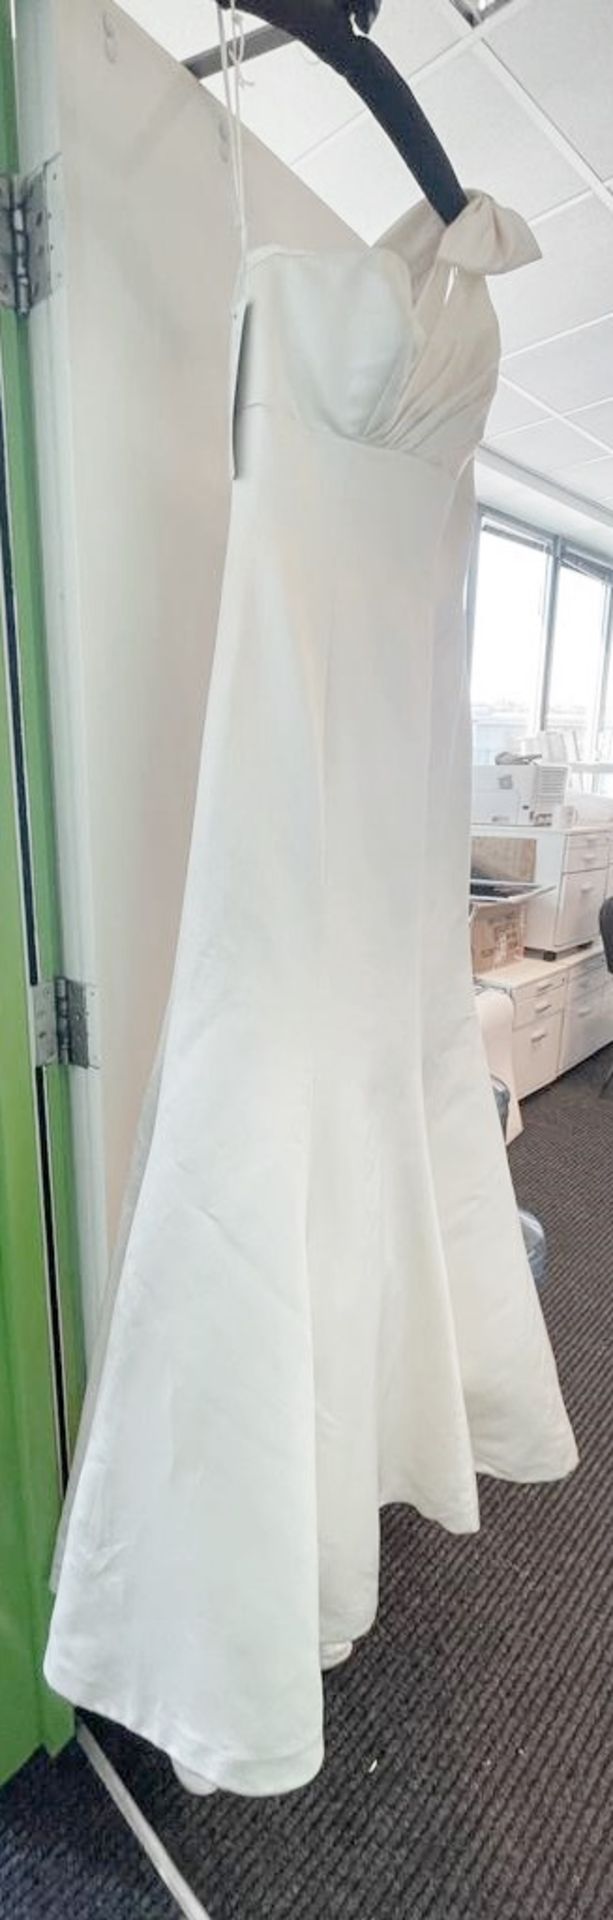 1 x MIA-MIA 'Liezel' Satin Designer Fishtail Wedding Dress Bridal Gown - Original RRP £1,600 - Image 7 of 14